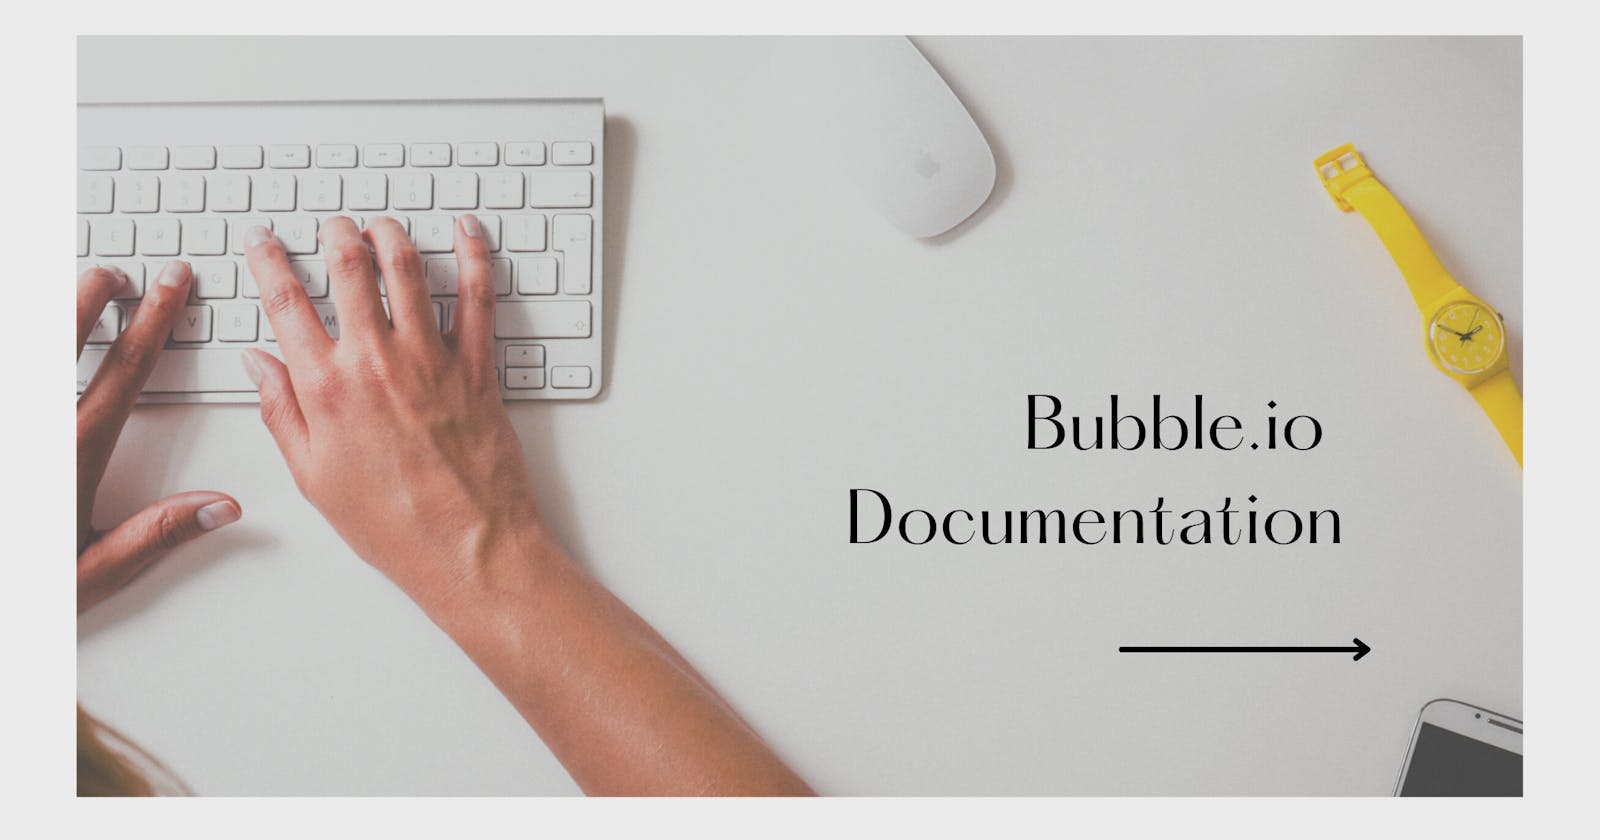 How do I create documentation for Bubble.io Application I am working on?